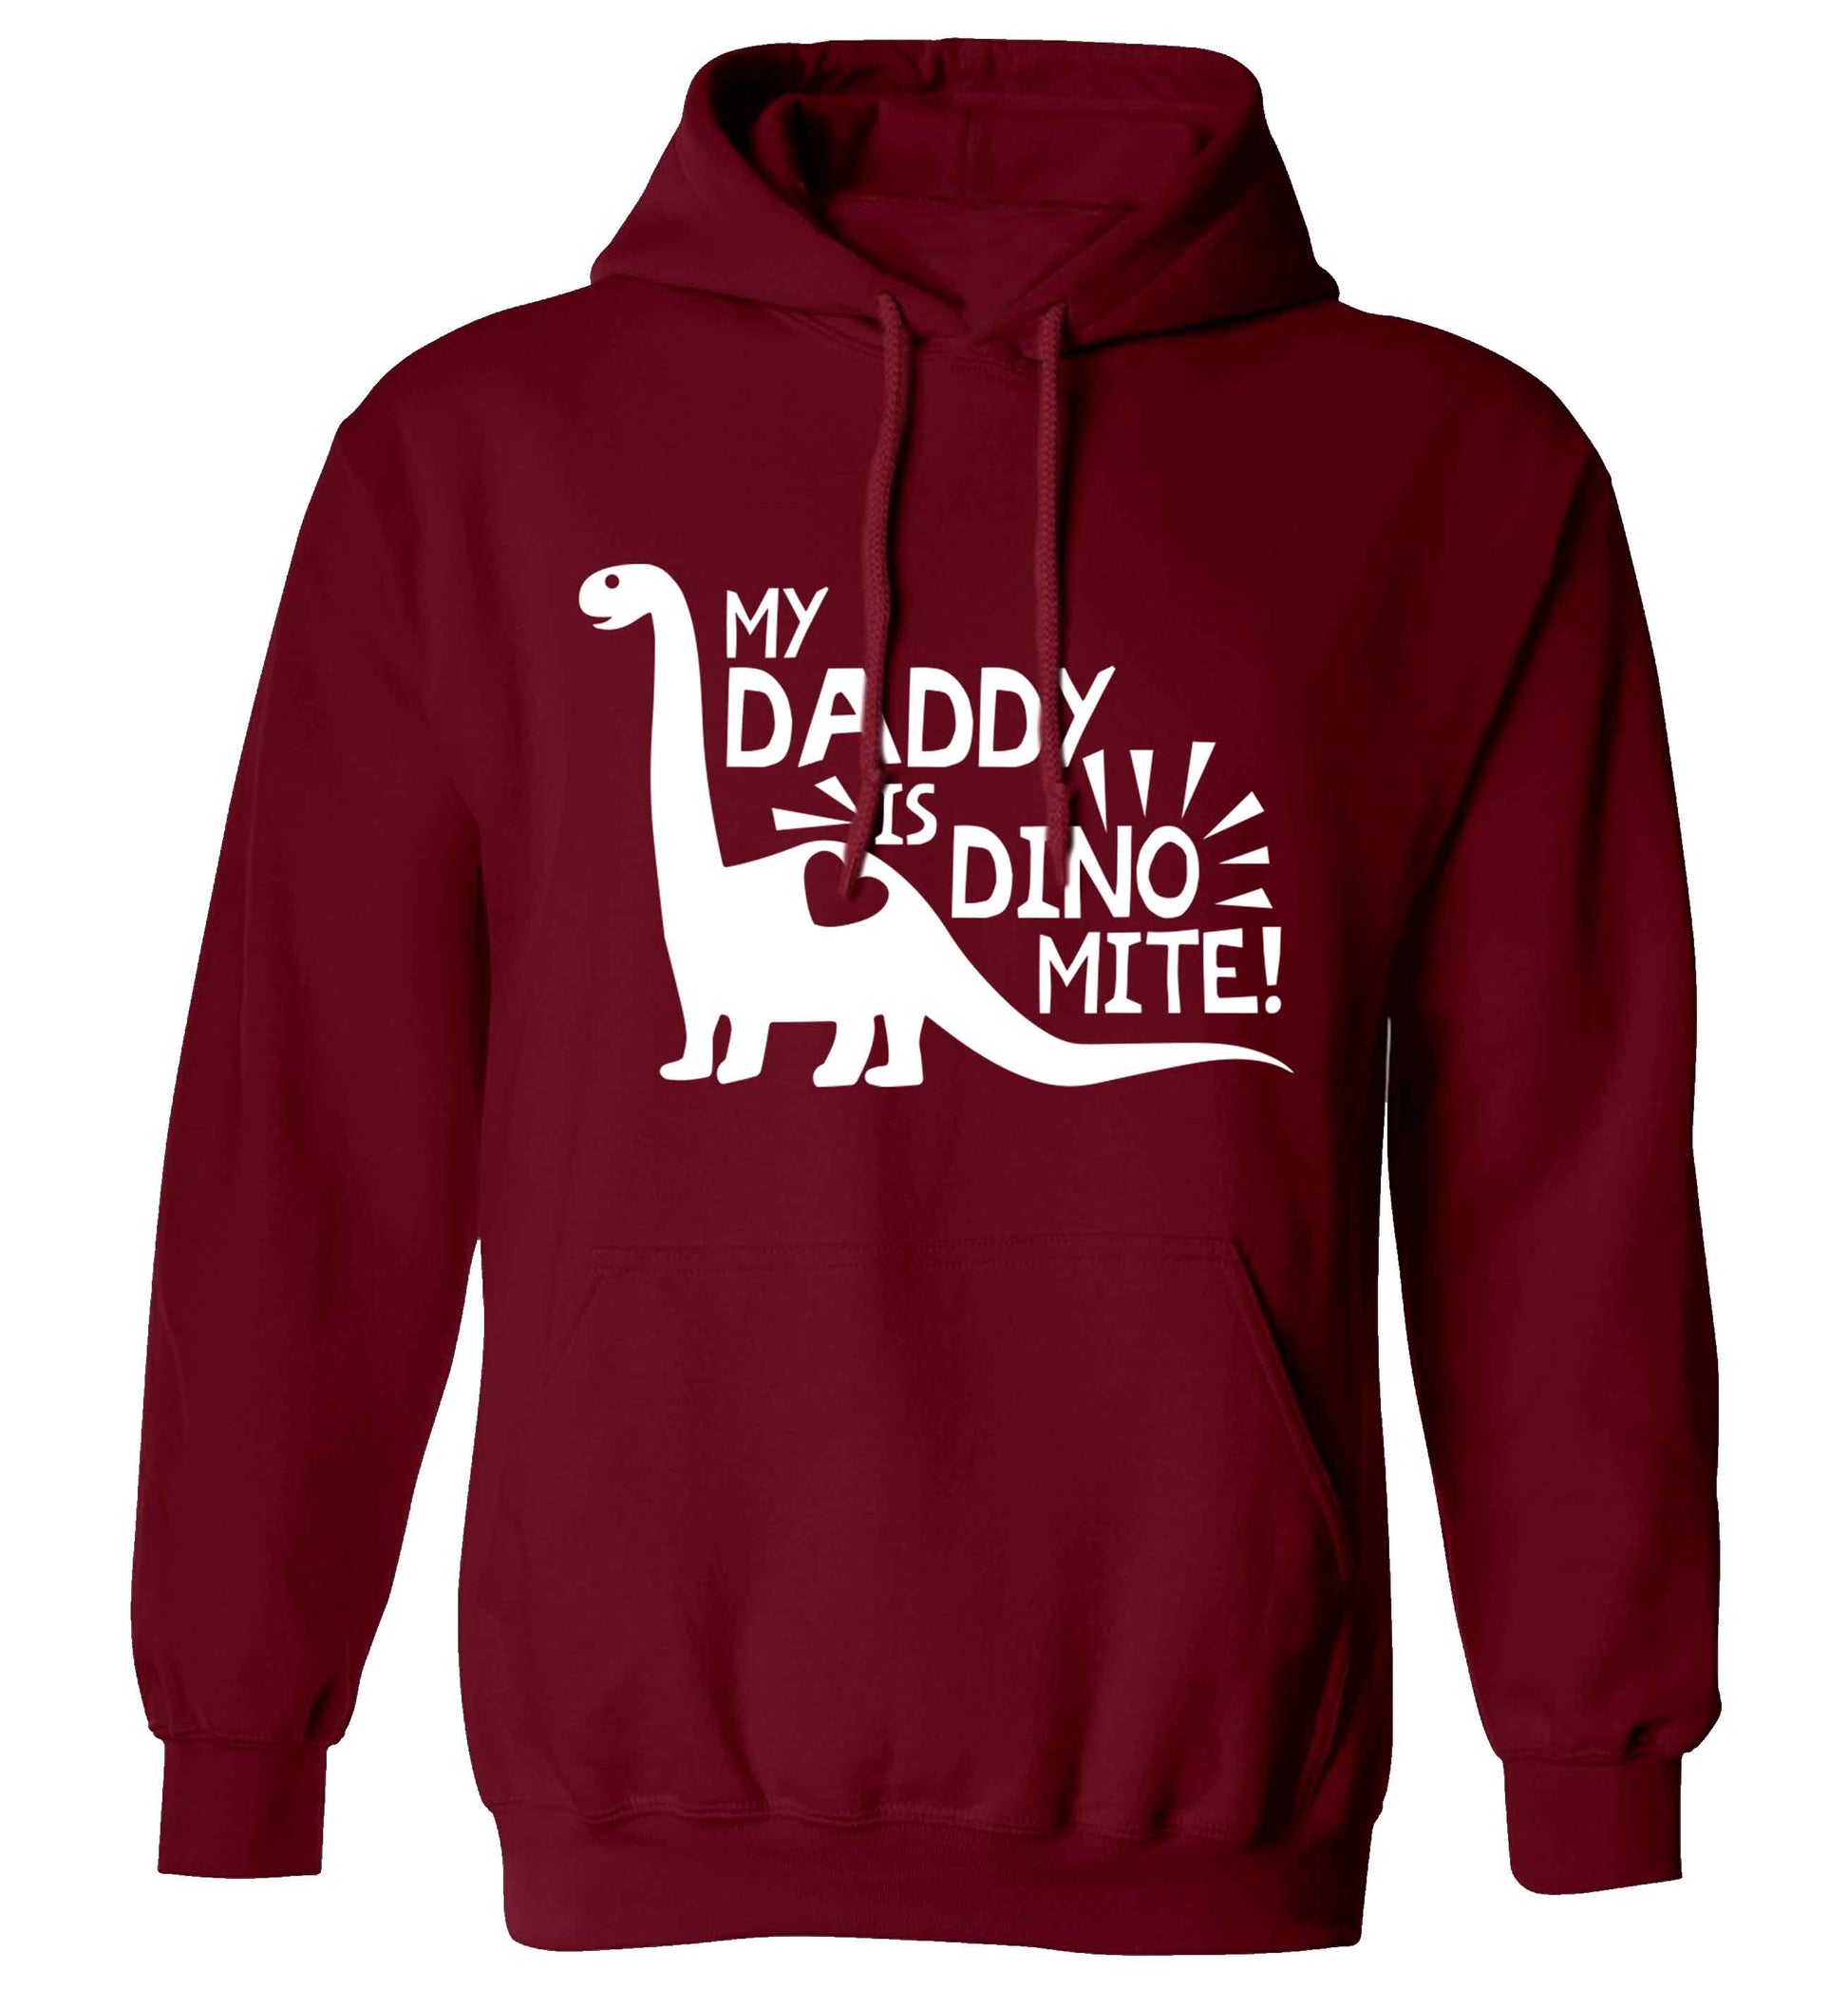 My daddy is dinomite! adults unisex maroon hoodie 2XL